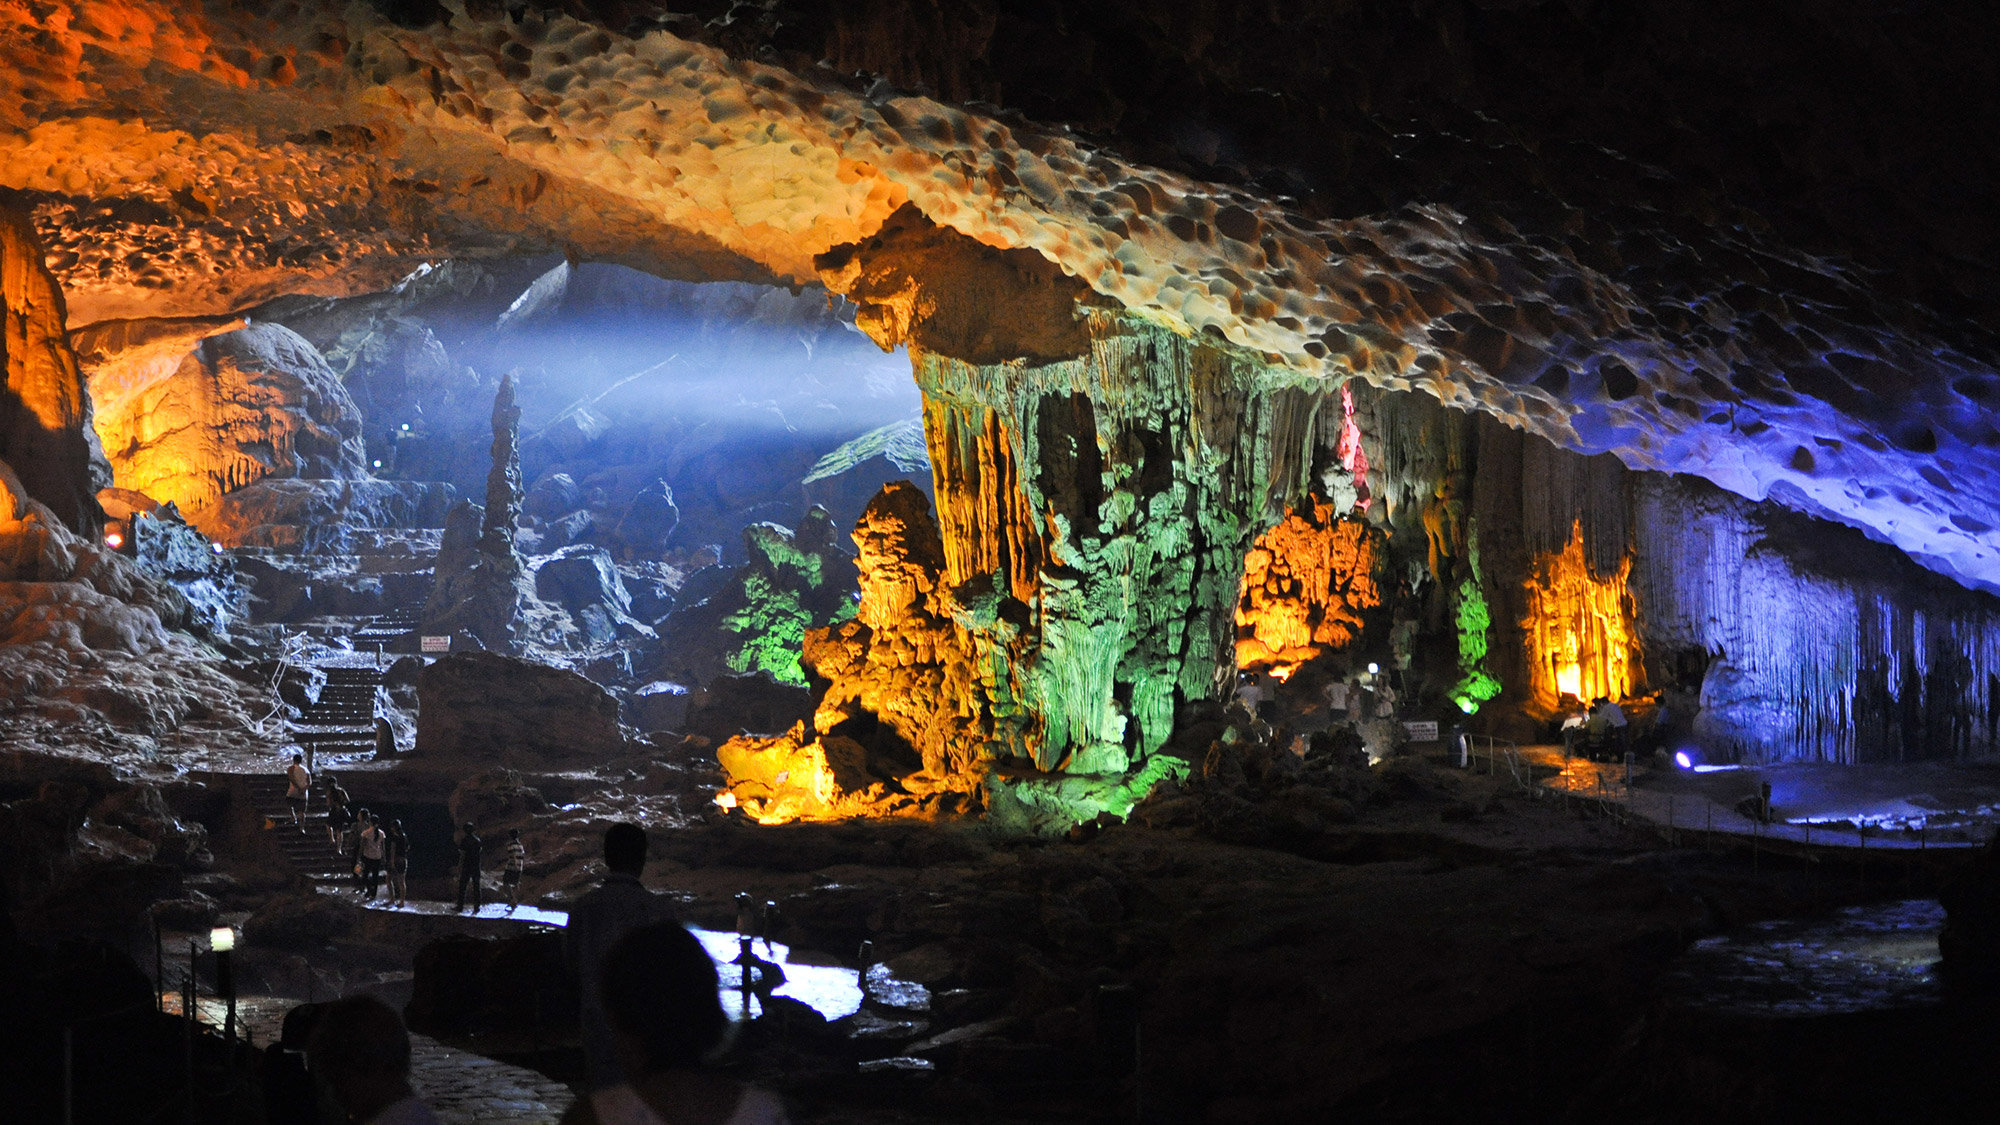 dau go cave - Halong Bay Highlights & Travel Guide 2022